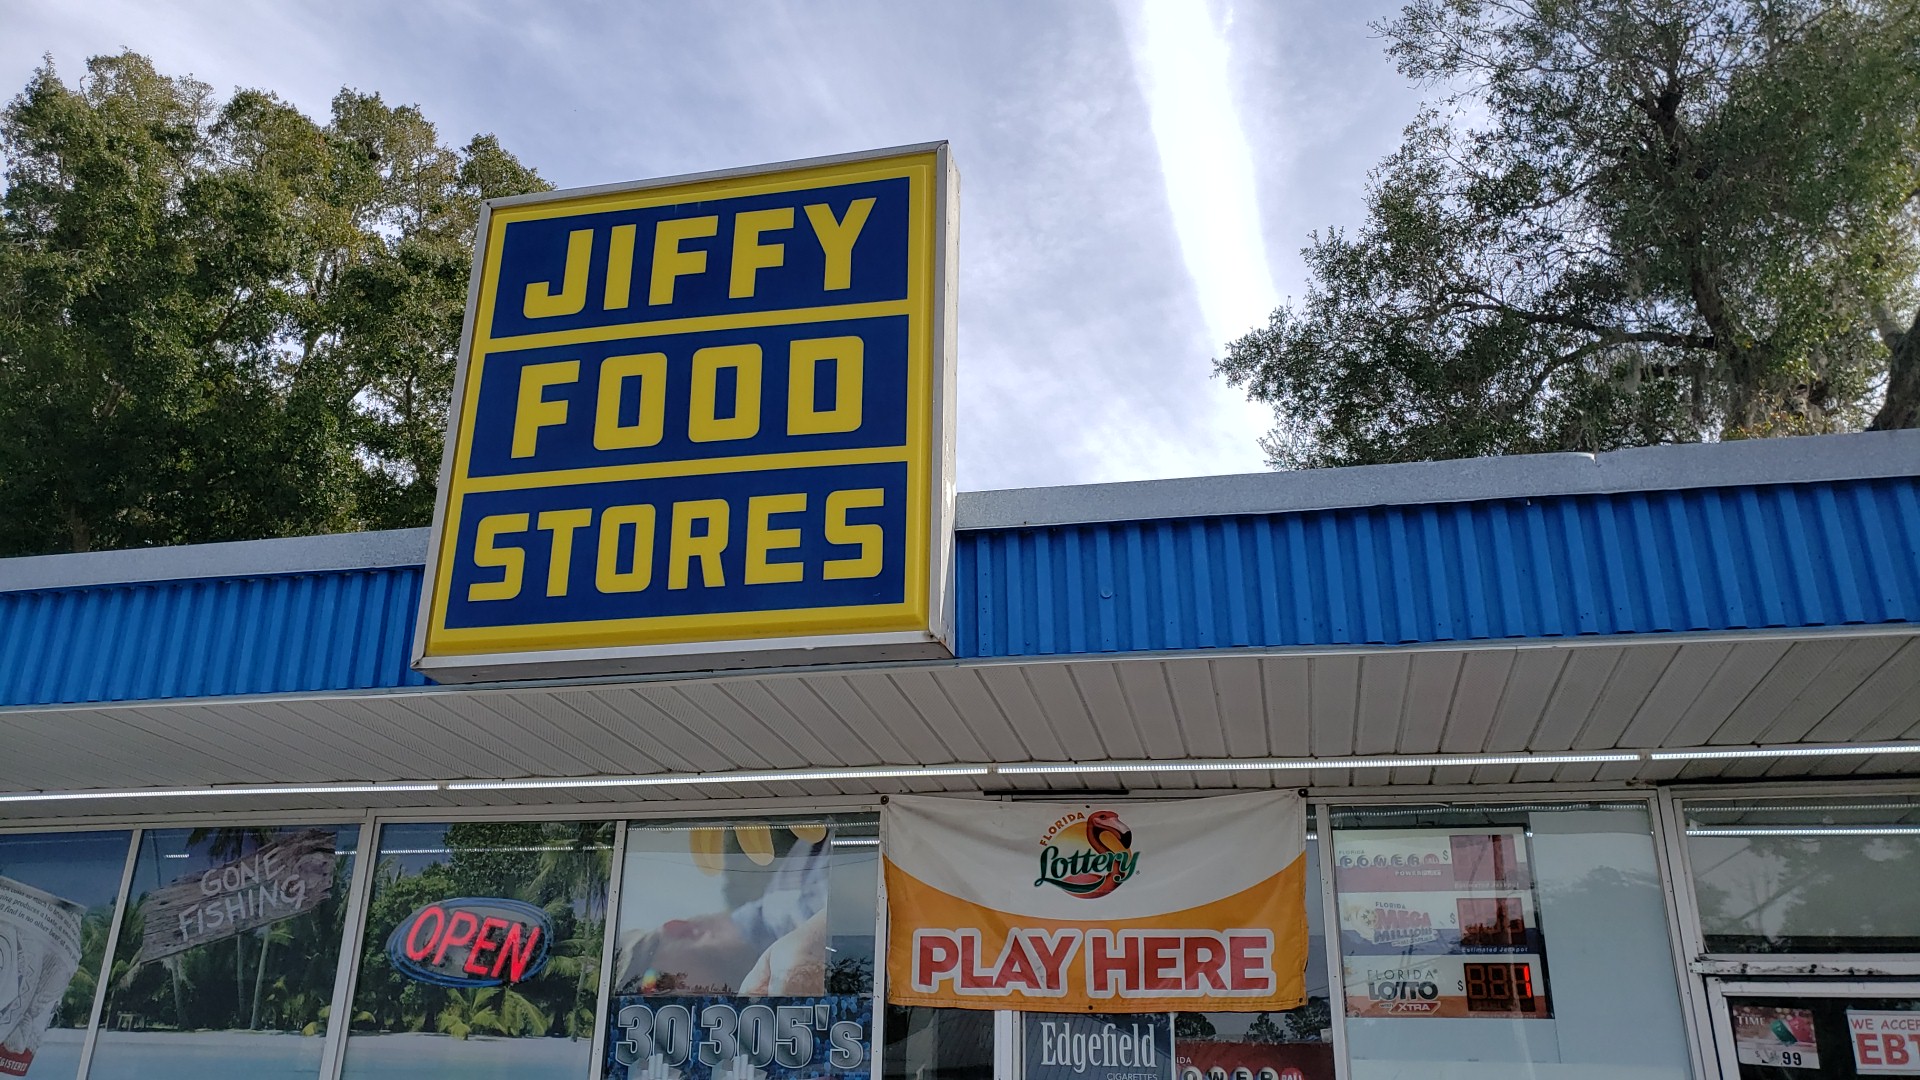 Jiffy Food Store